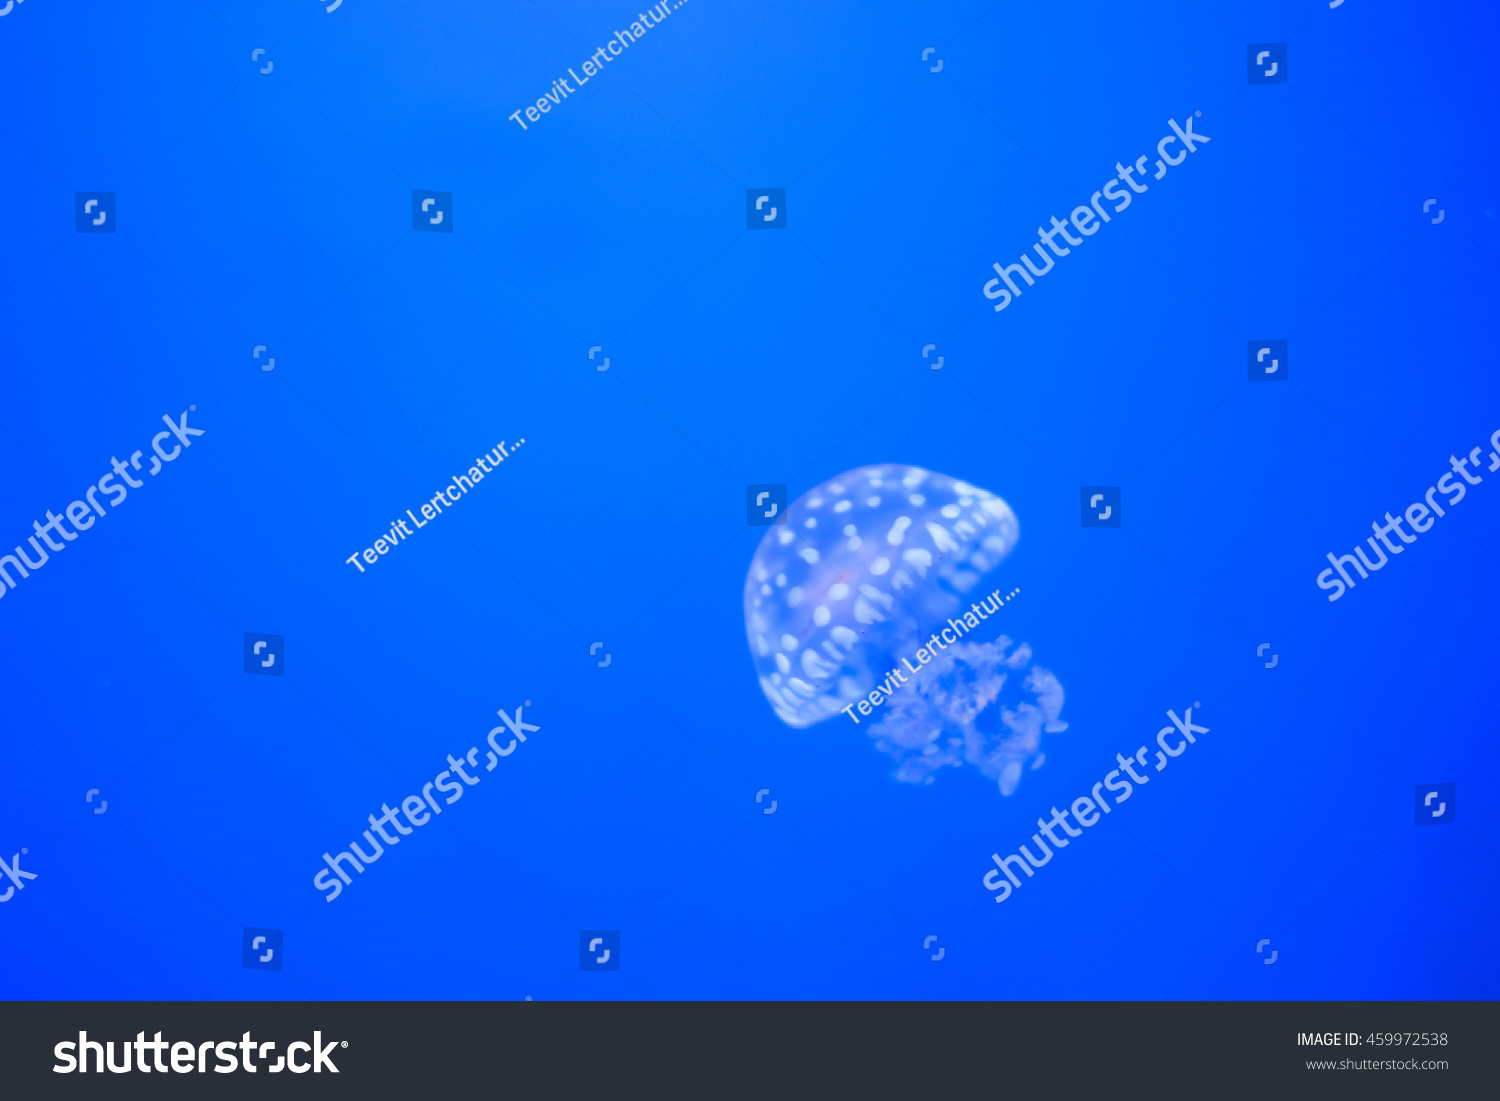 Tiny jellyfish on blue background #459972538